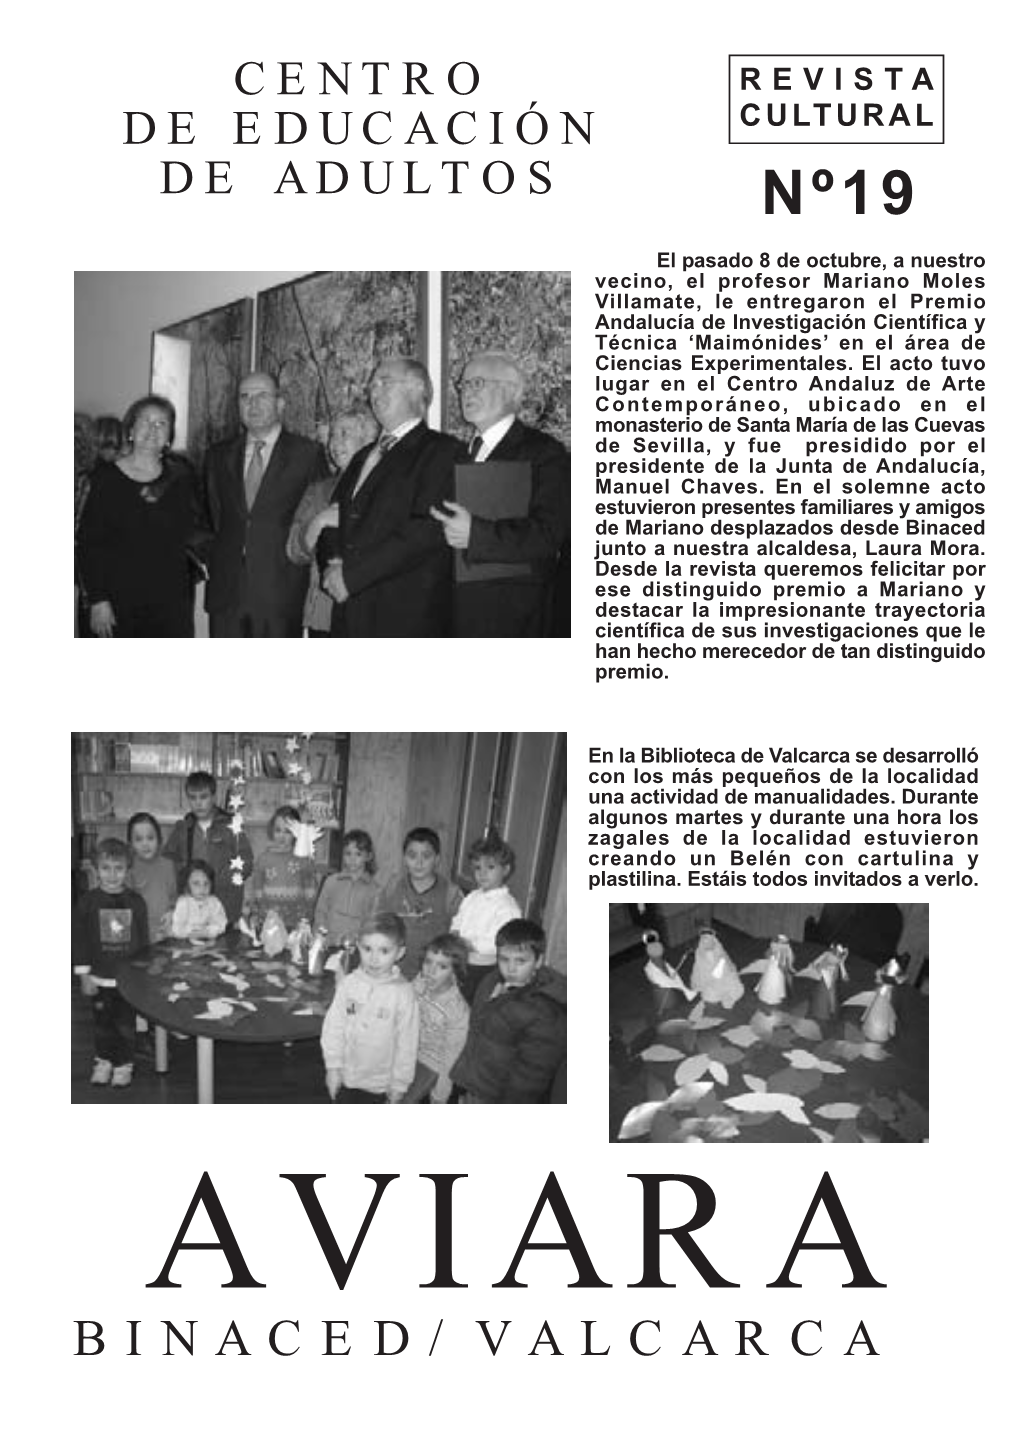 BINACED/VALCARCA REFLEJOS AVIARA, 30 De DICIEMBRE De 2007 MARIA CASTANERA CASTANERA CUMPLE UN SIGLO